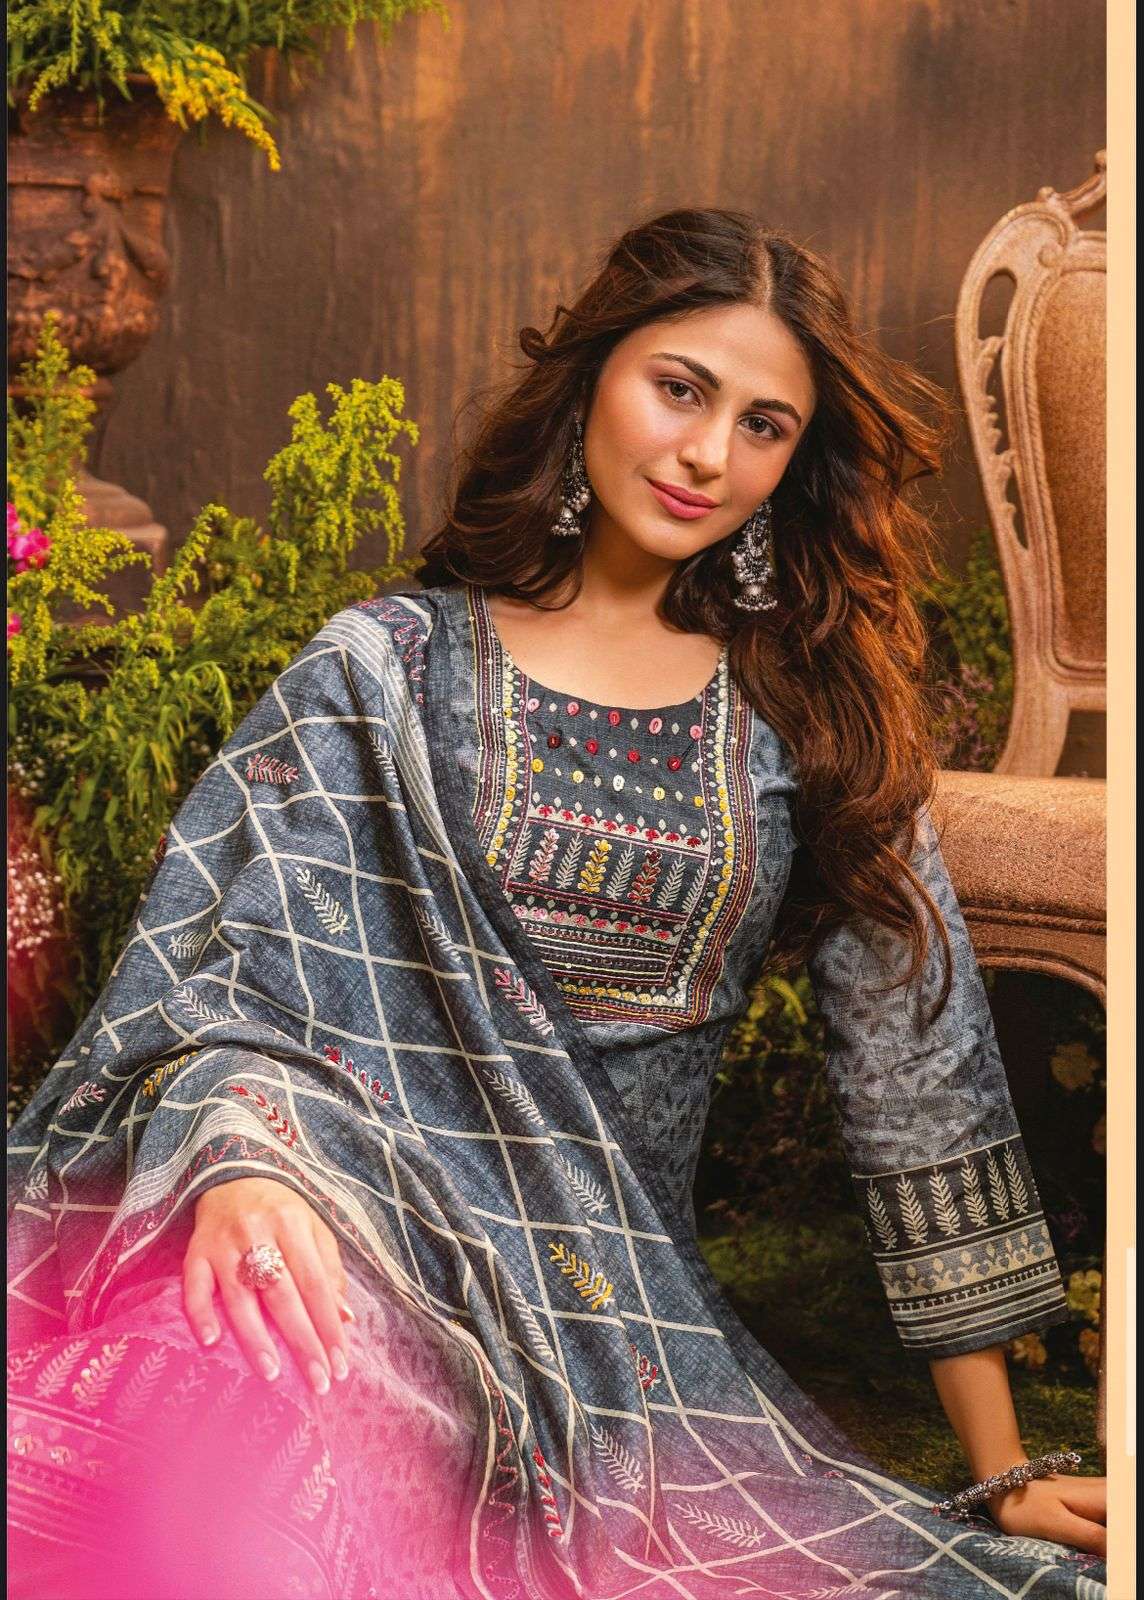 anju fabrics once more vol-2 3061-3066 series fancy look designer kurtis catalogue online market surat 